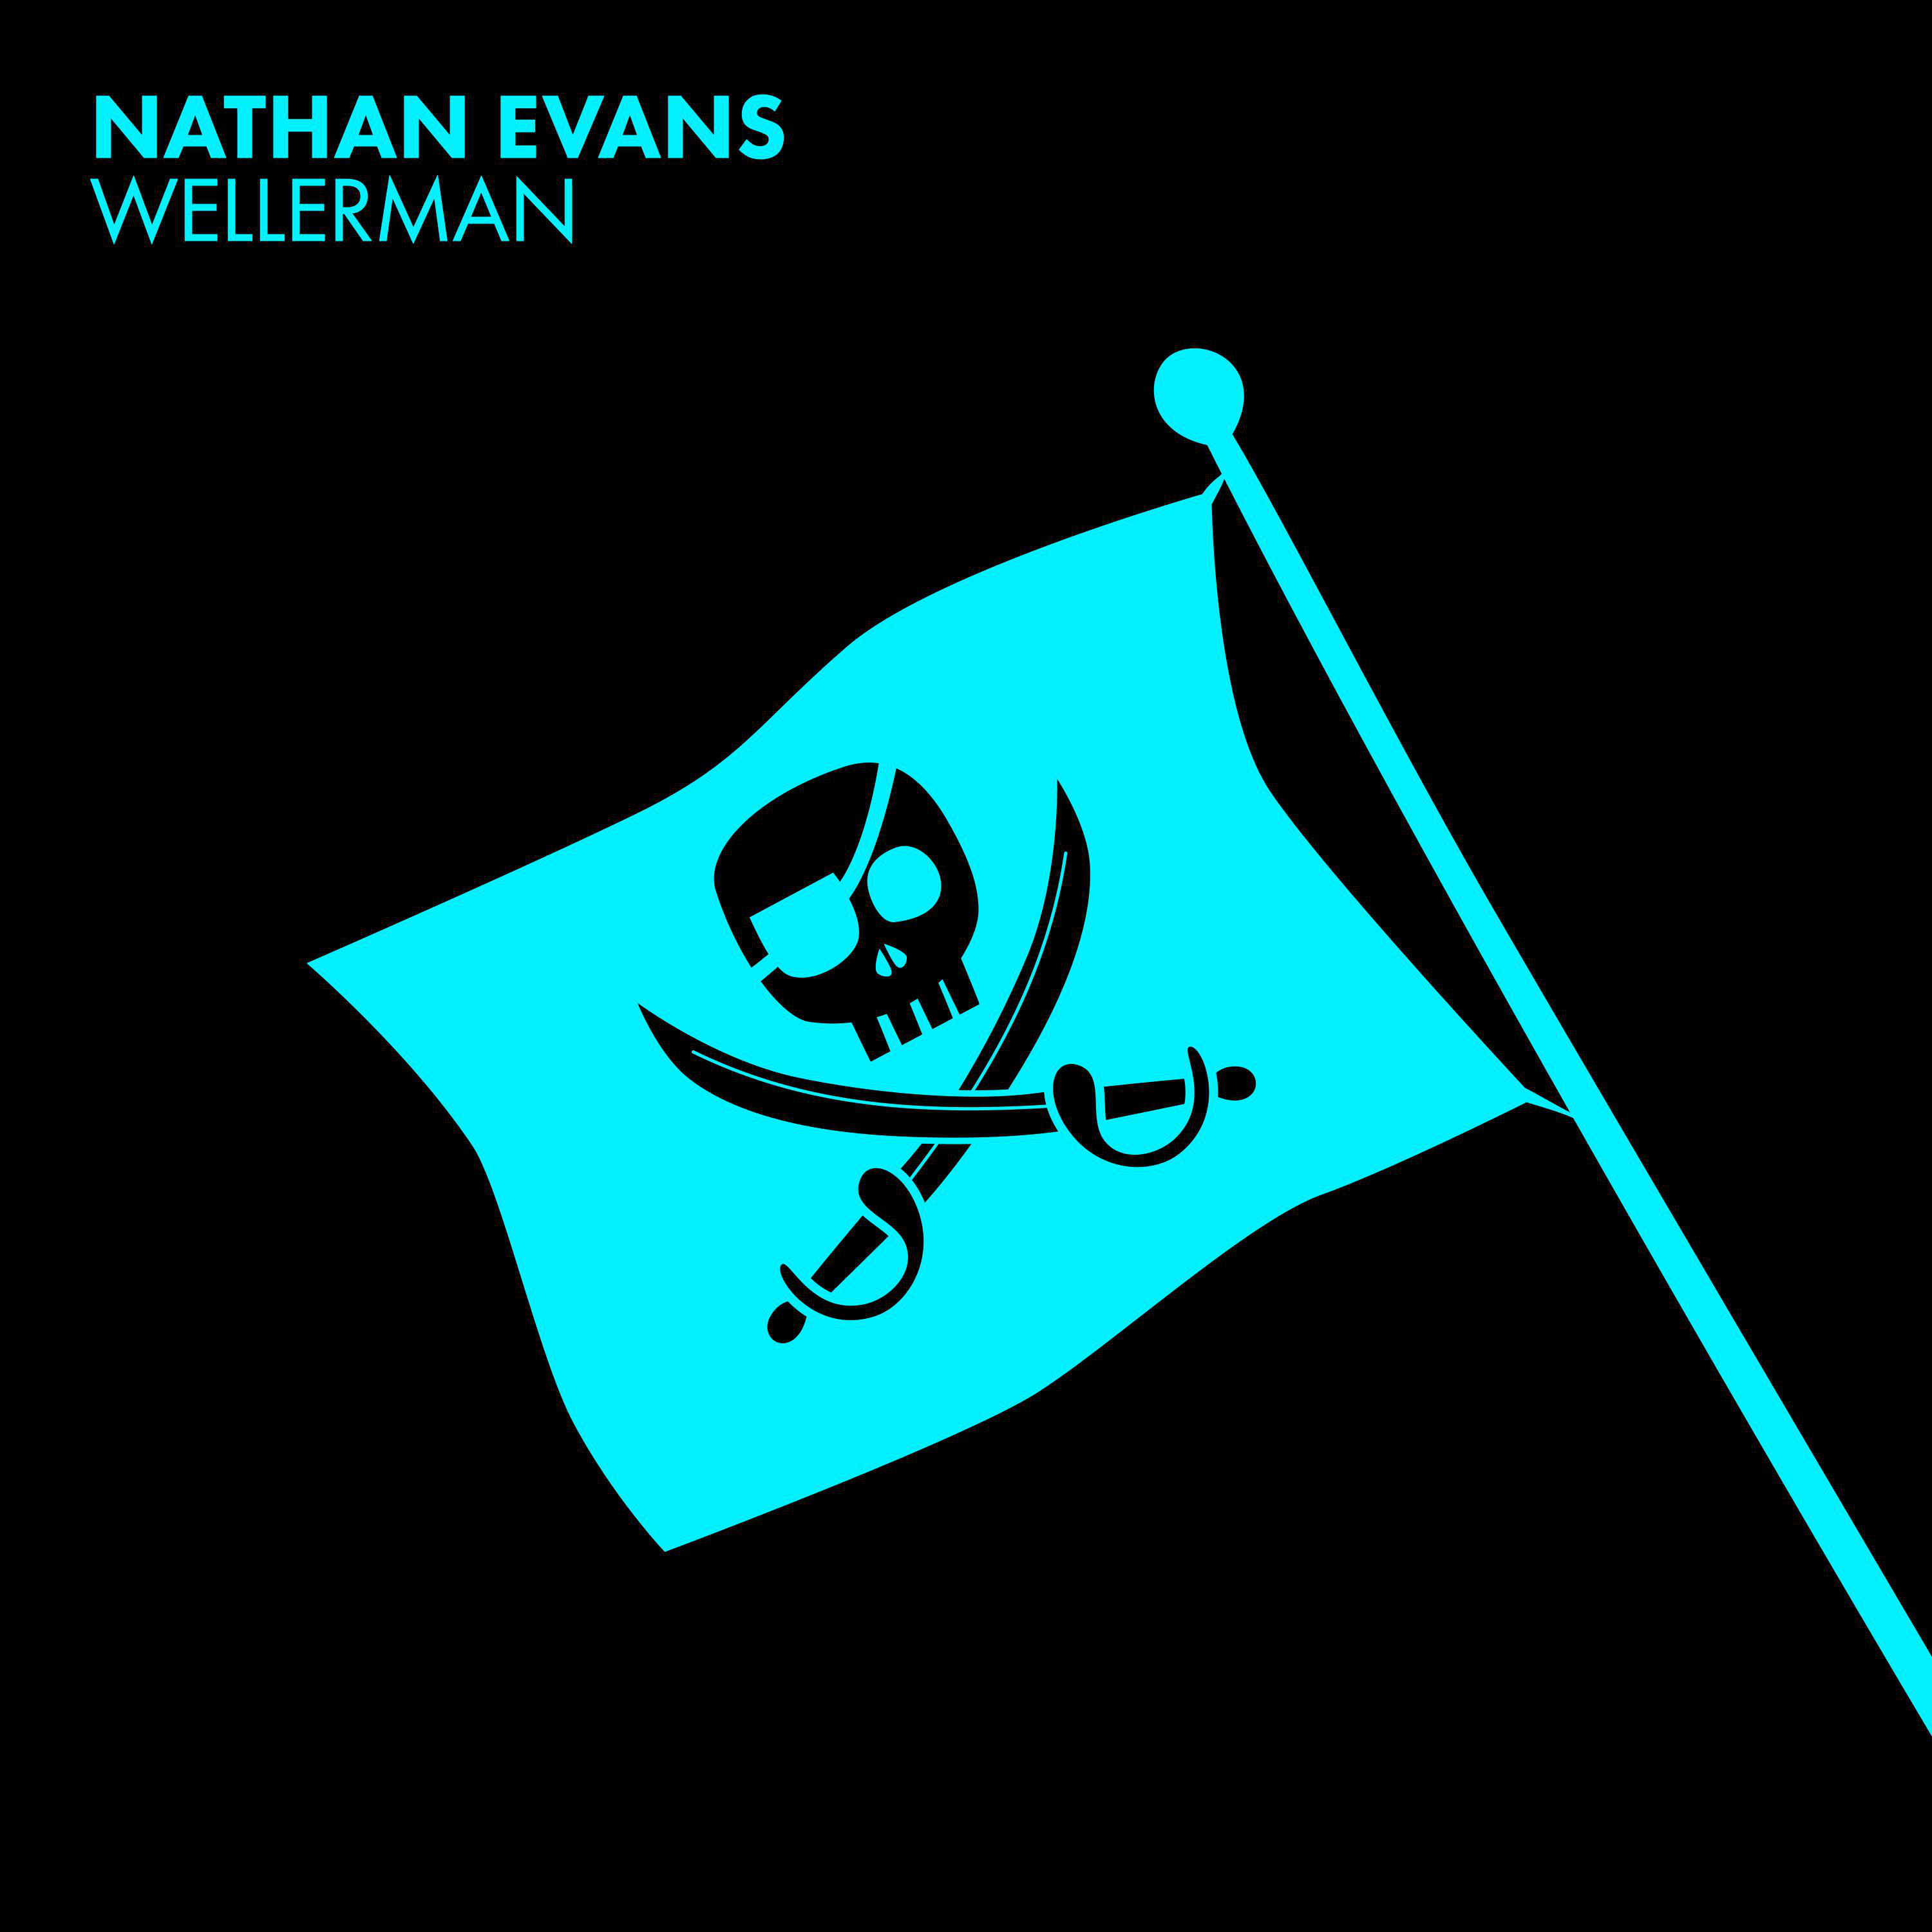 WELLERMAN (MAXI Nathan (5 - CD) (SEA Evans - (2-Track)) Zoll Single SHANTY) CD